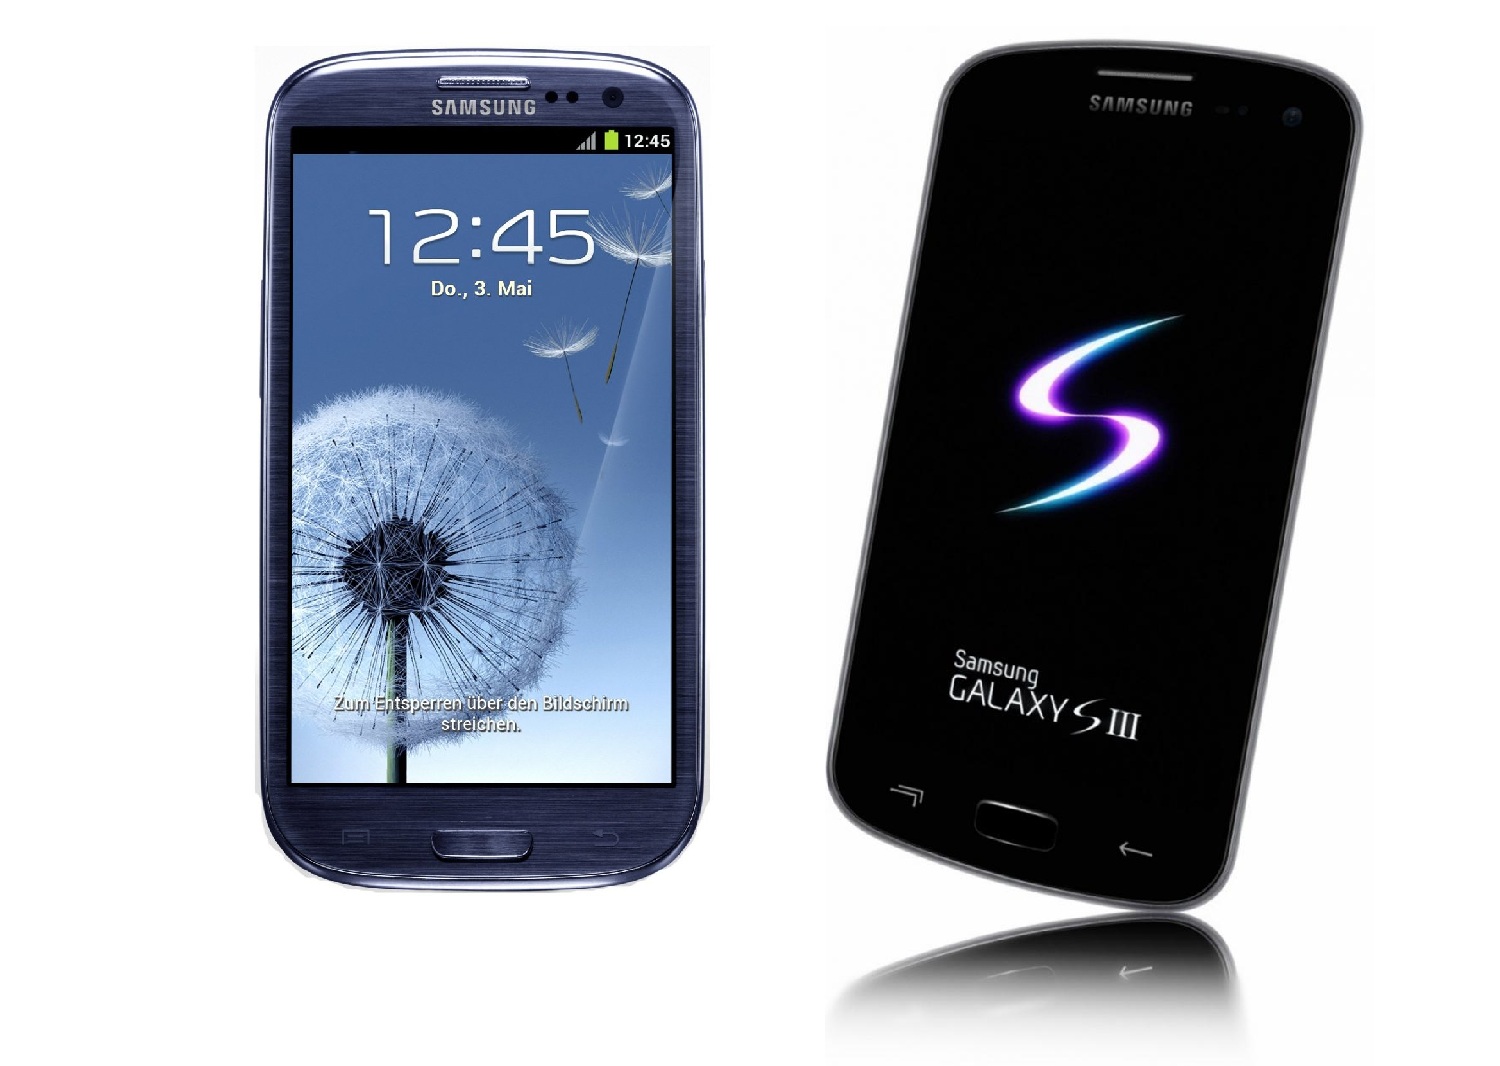 Samsung Smart S3